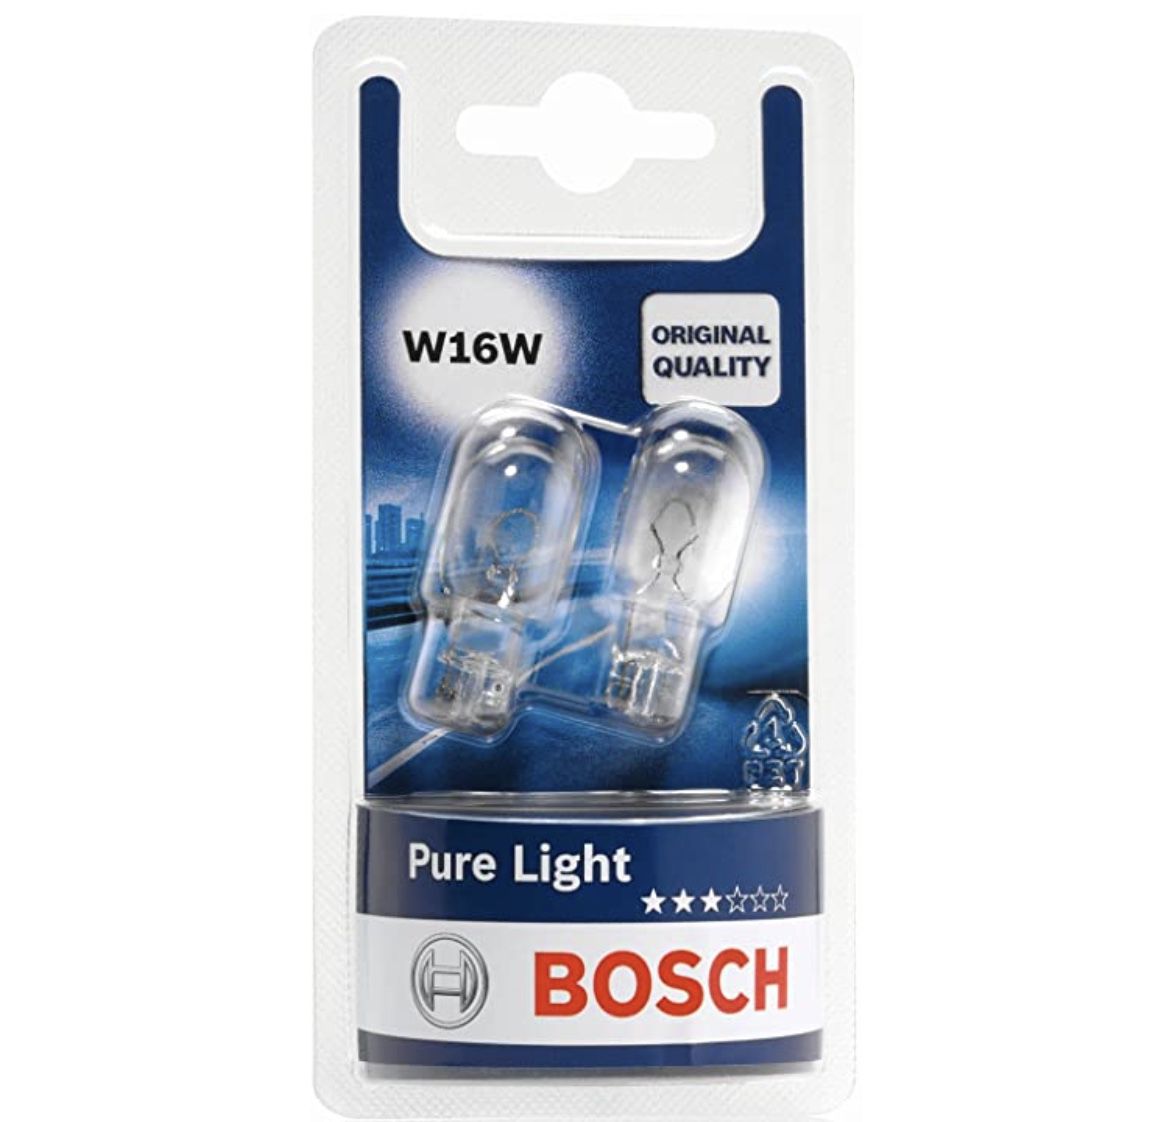 2er Set Bosch W16W Pure Light Fahrzeuglampen für 0,79€ (statt 2€)   Prime